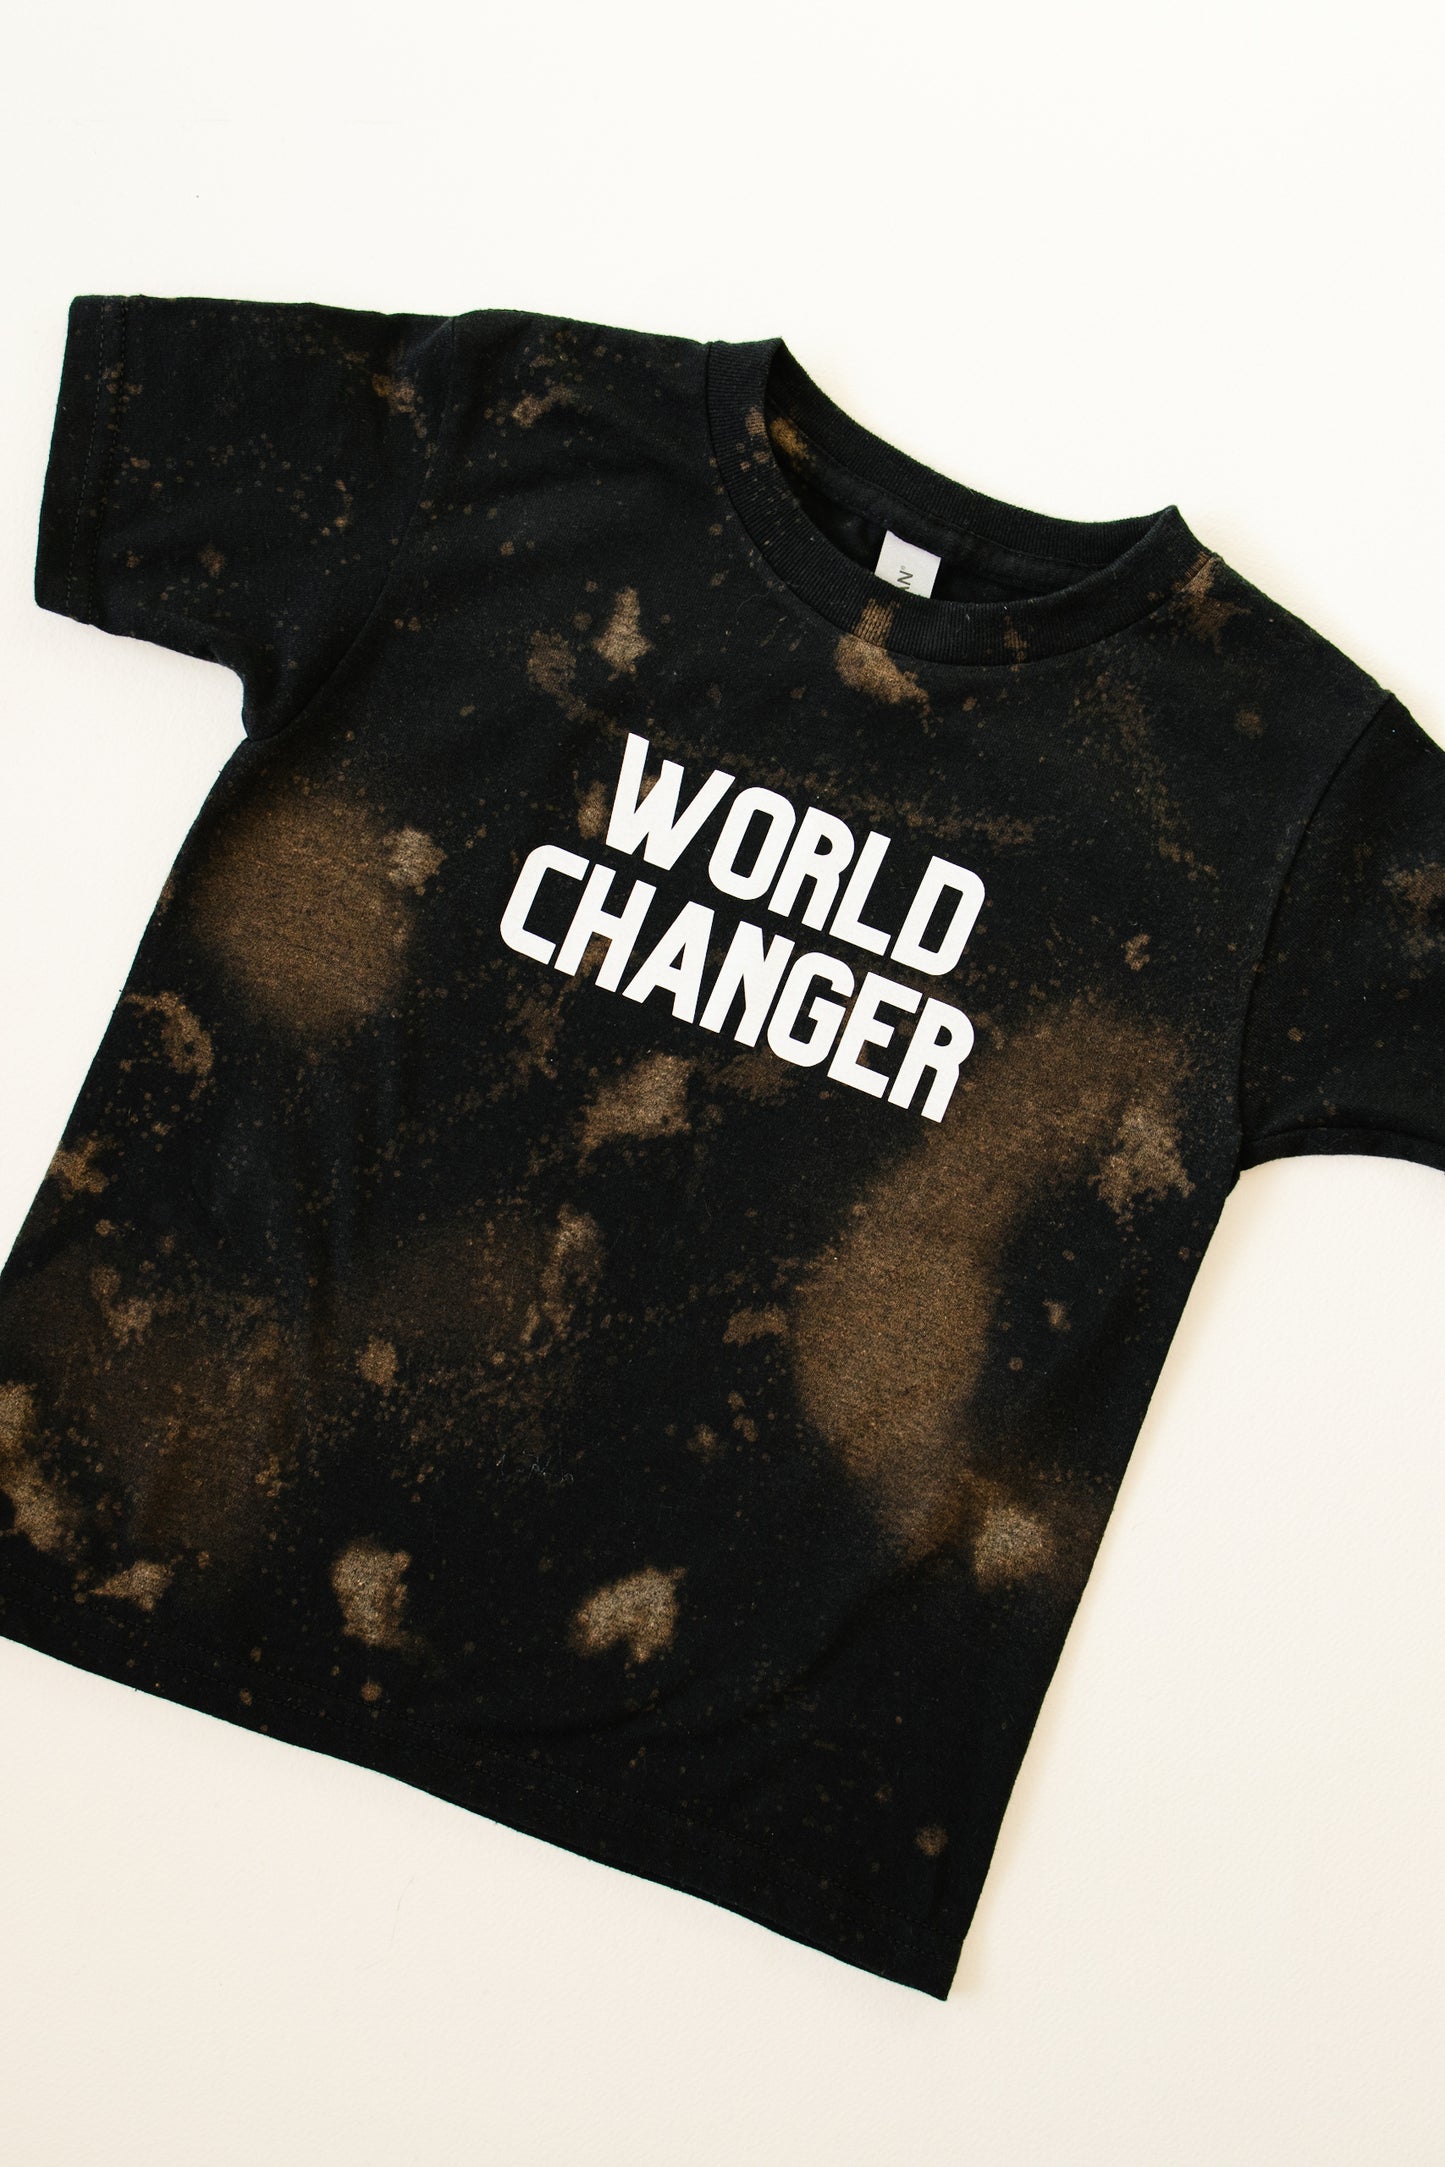 'World Changer' Youth Tshirt